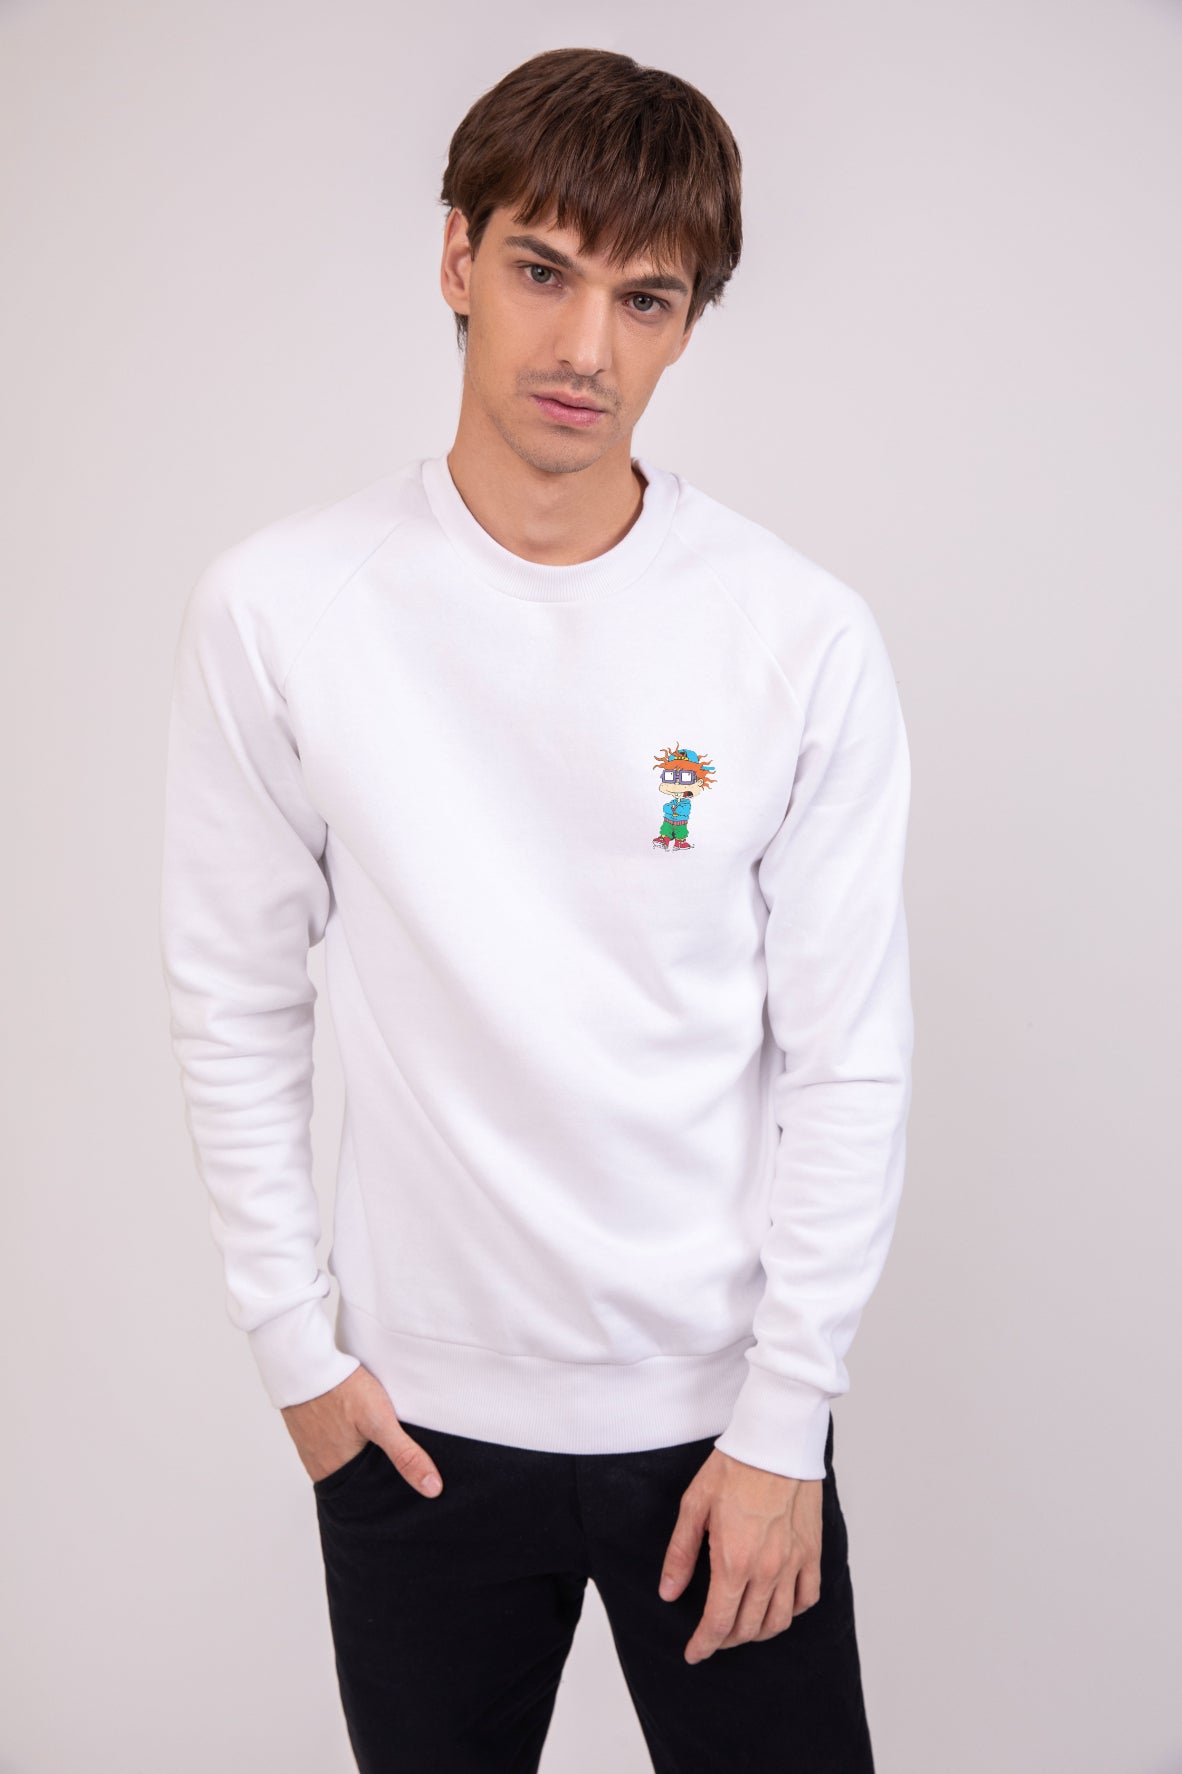 Chuckie Radiant White - Printed Sweatshirt